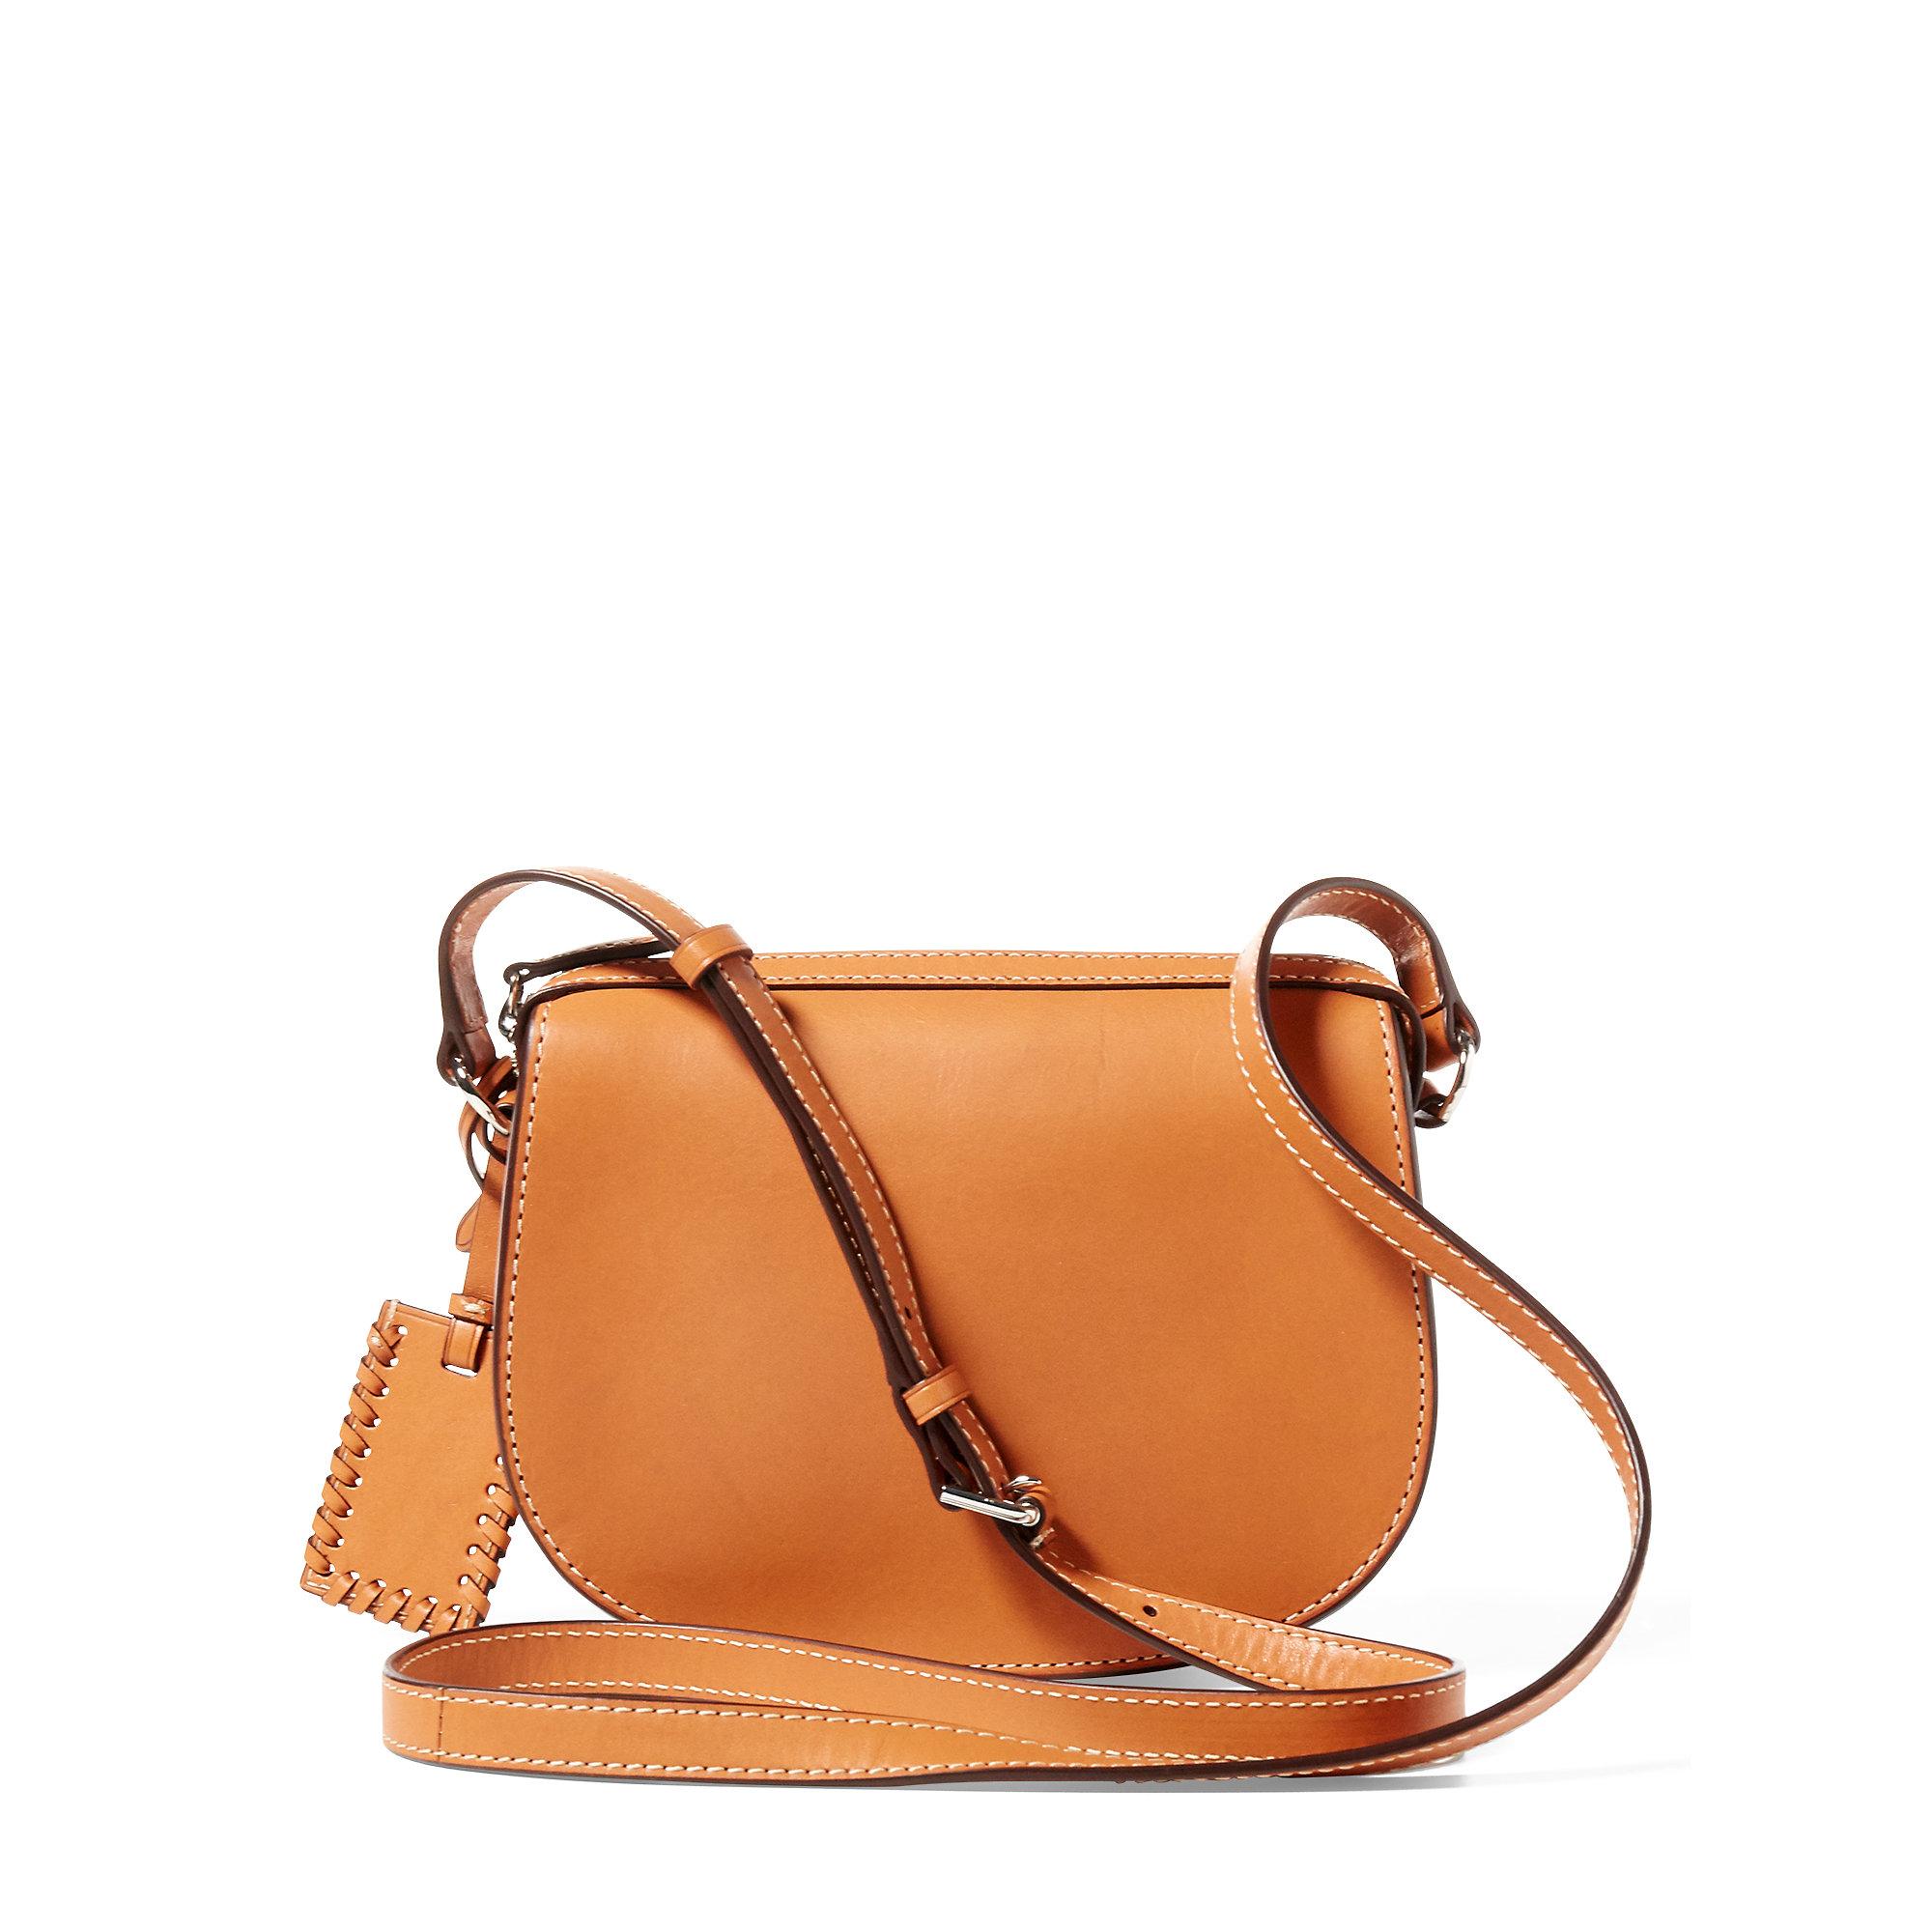 Polo Ralph Lauren Leather Mini Crossbody Bag in Brown - Lyst